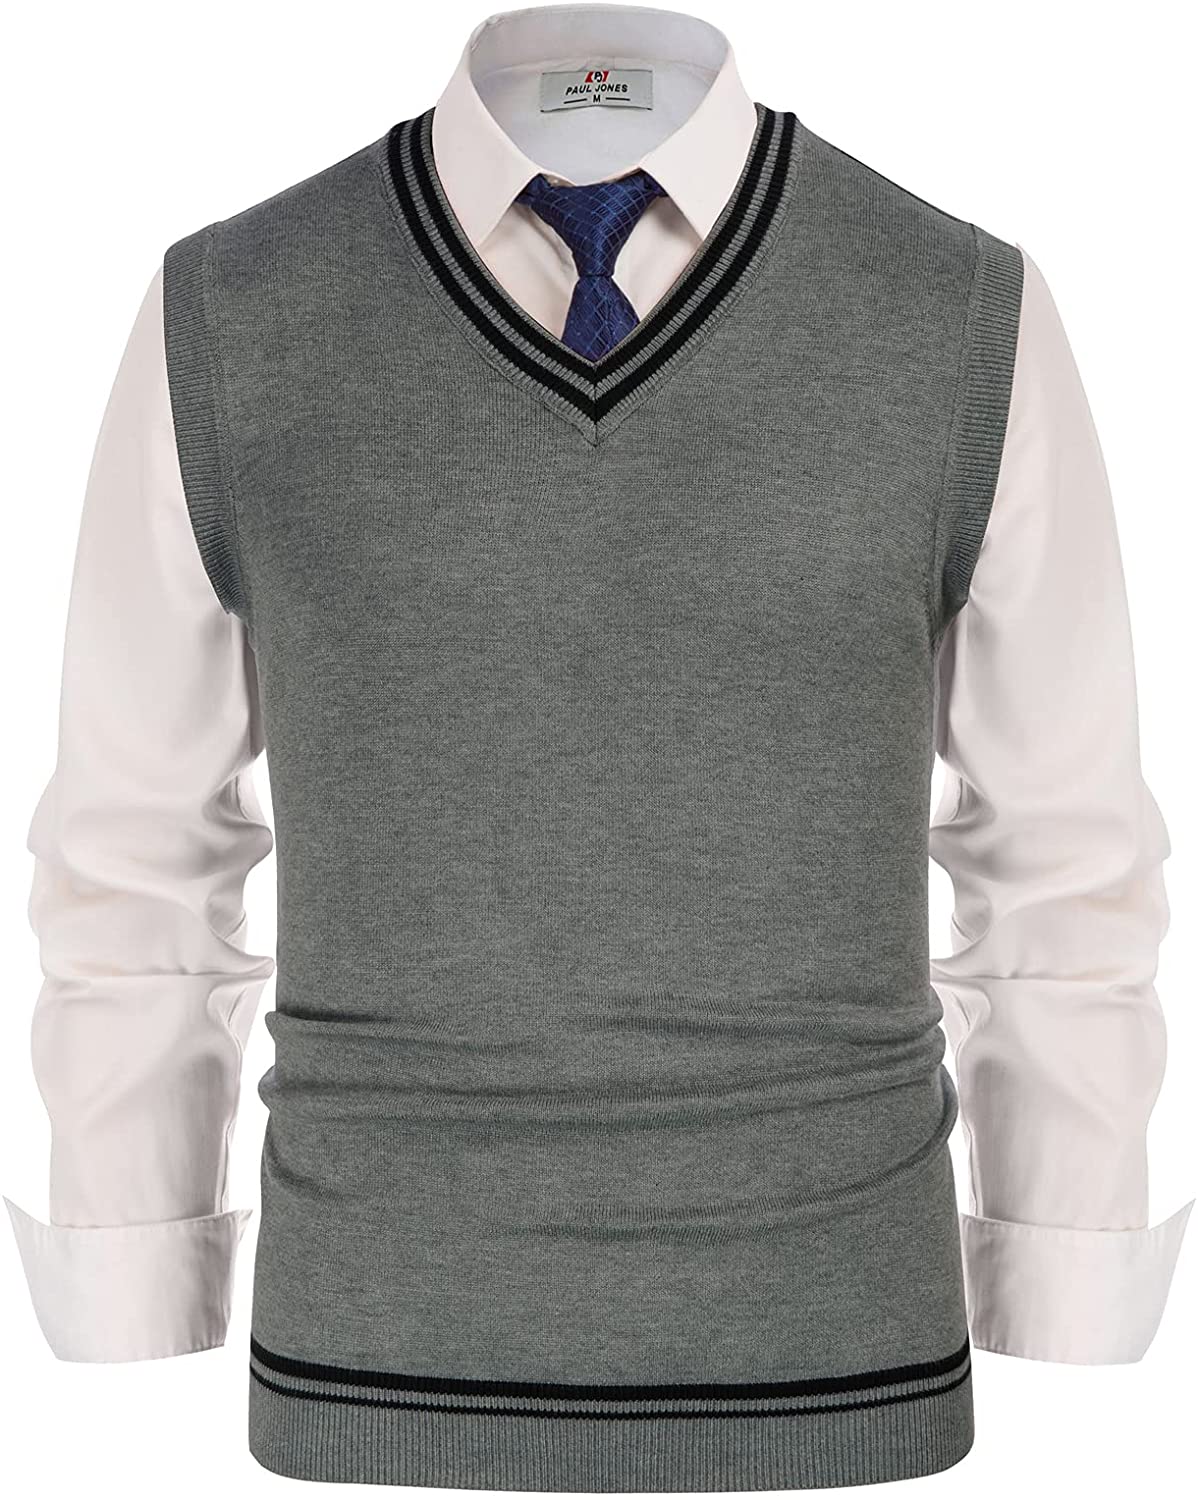 PJ PAUL JONES Mens V-Neck Knitted Sweater Vest Solid Plain Sleeveless Pullover Knitwear 